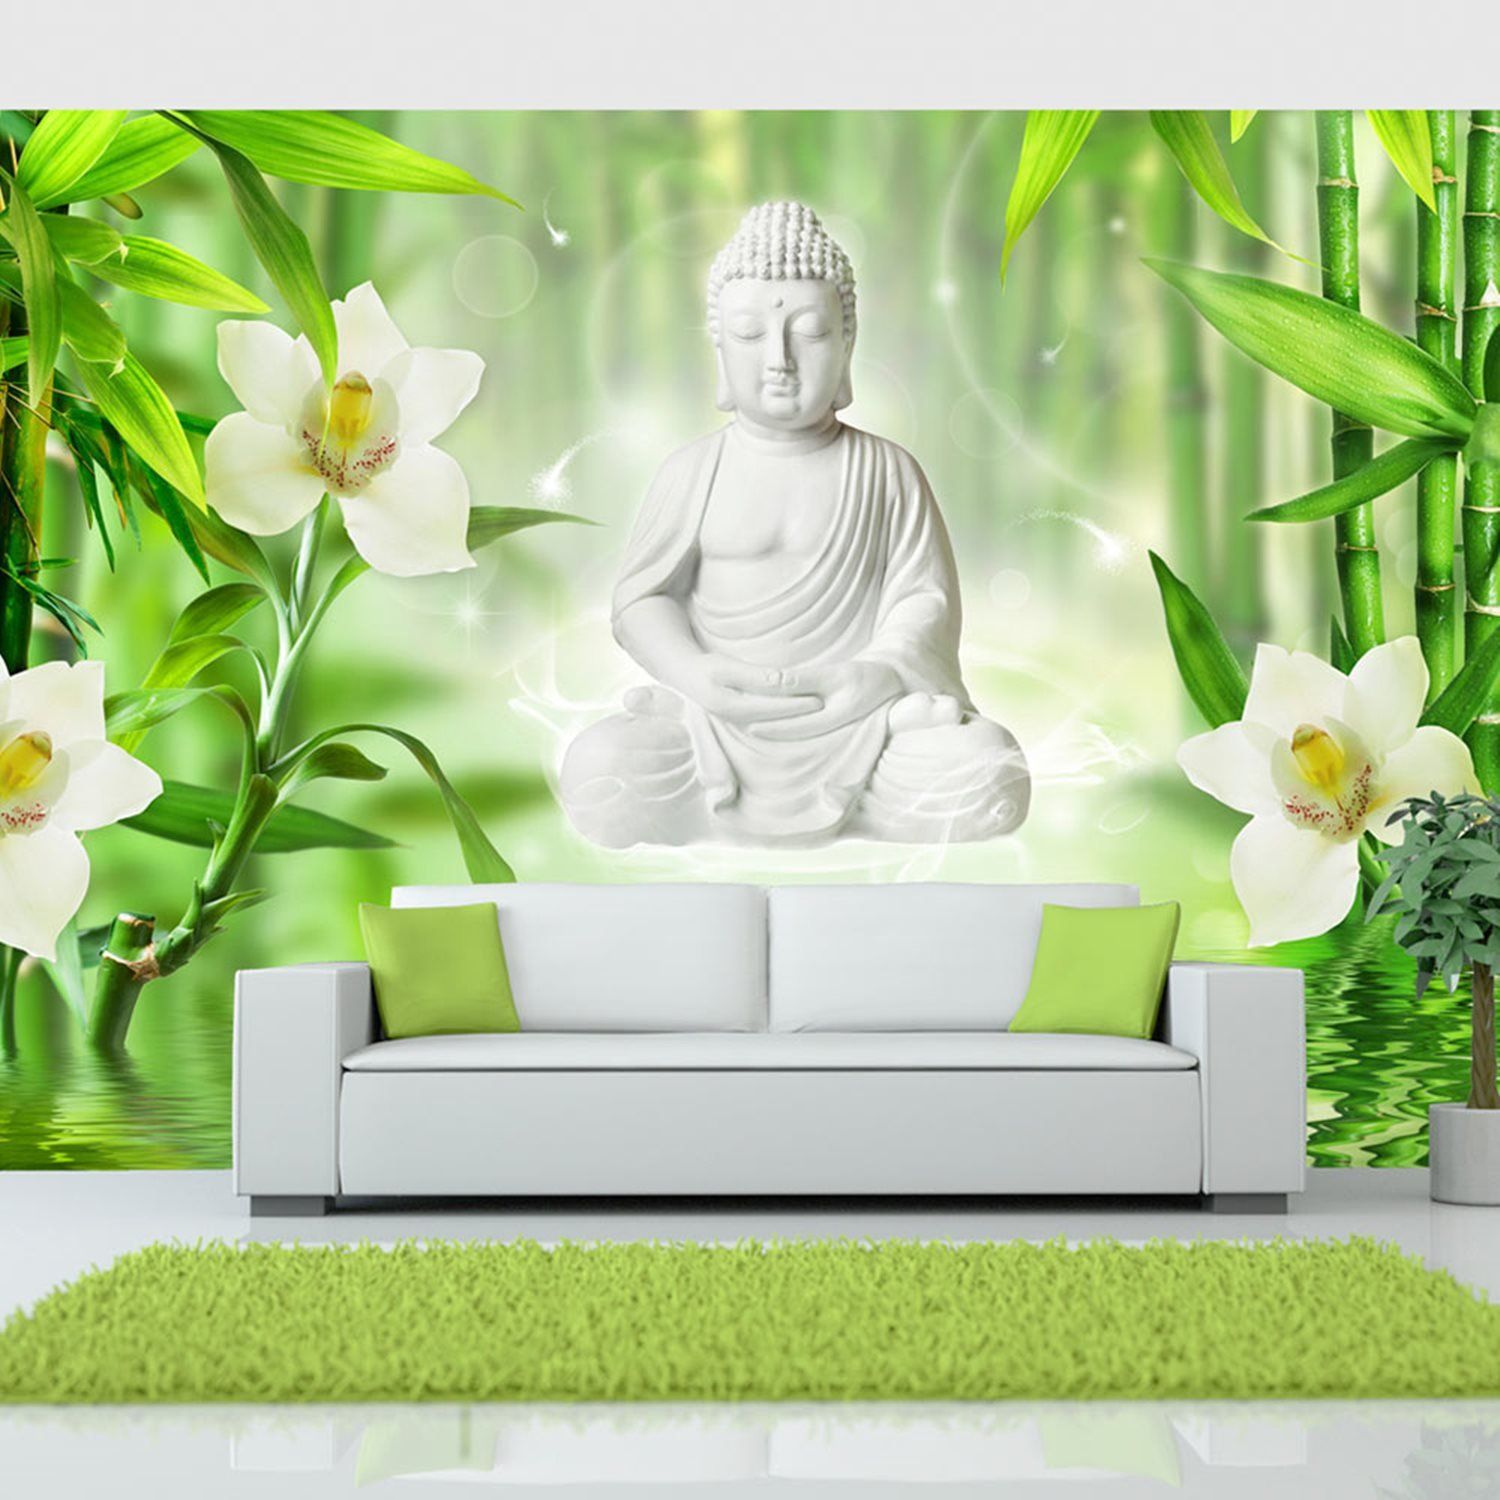 Wallpaper - Buddha and nature 